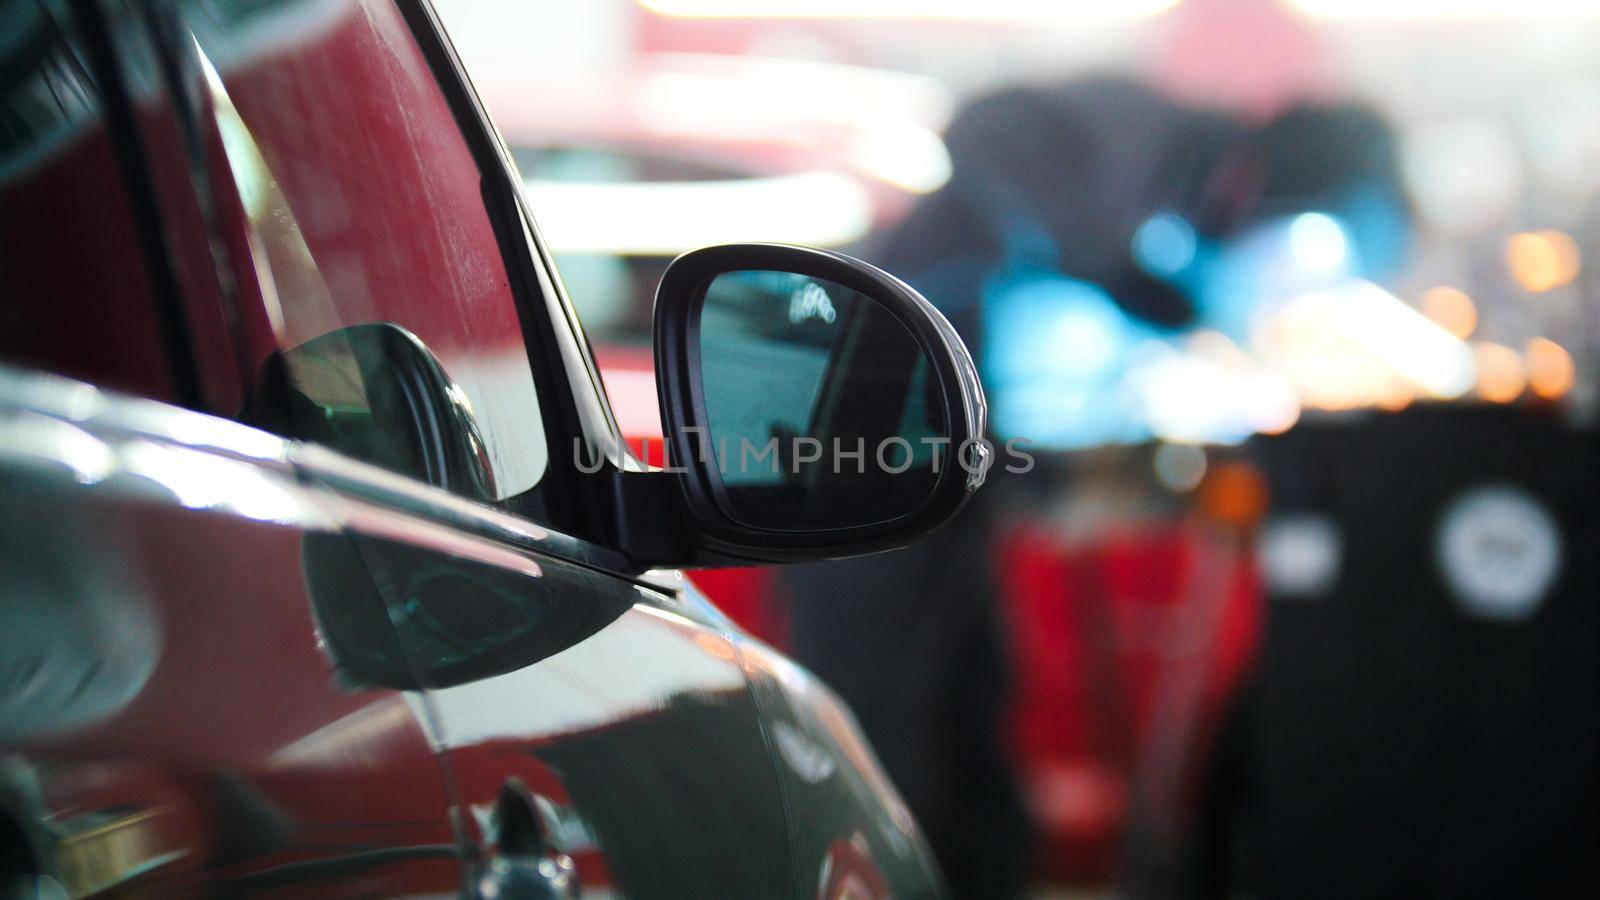 Blurred background - Welding repairing in car service, telephoto